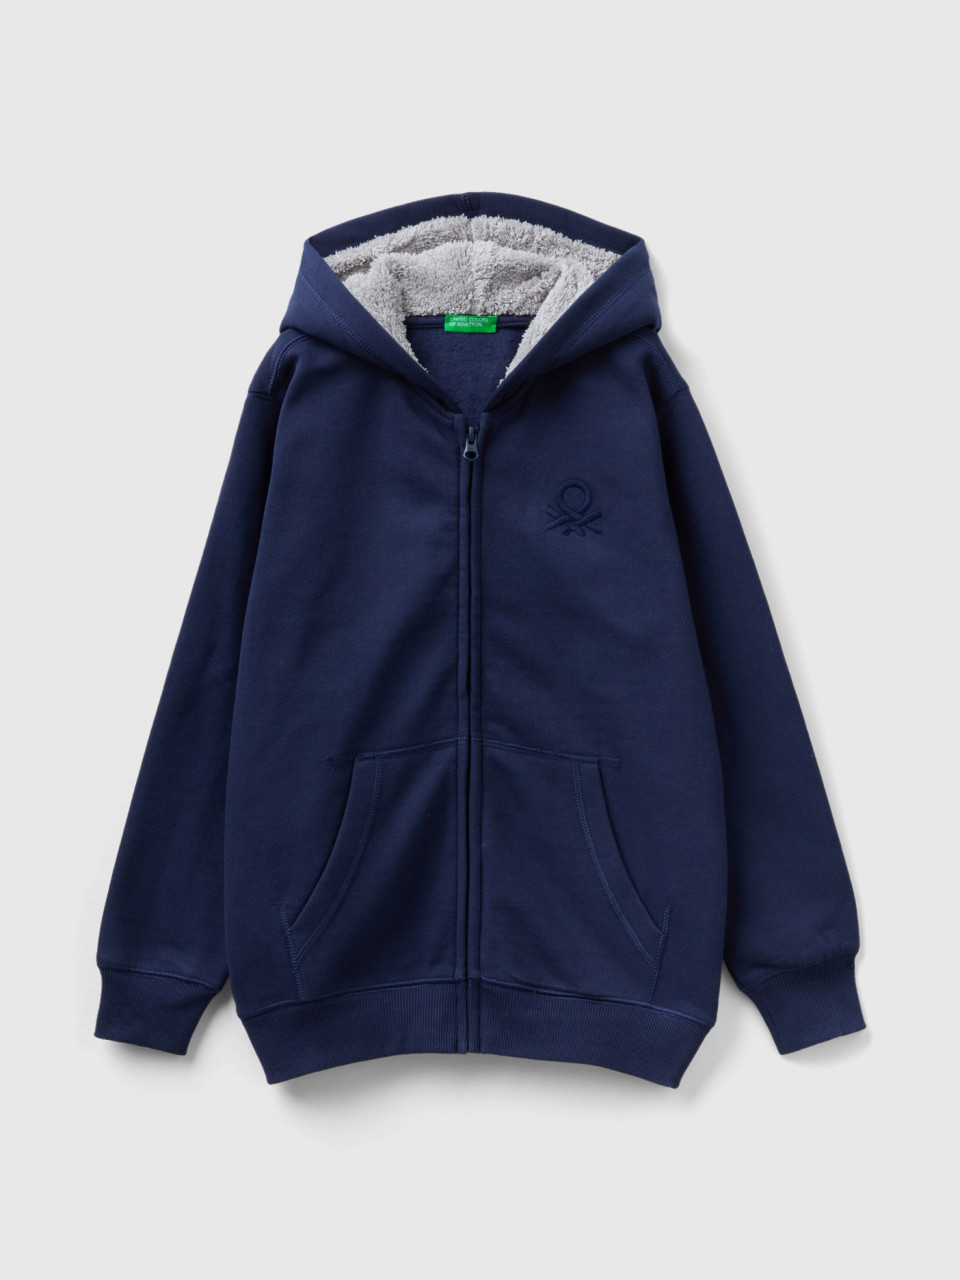 Benetton, Sweatshirt With Lined Hood, Dark Blue, Kids